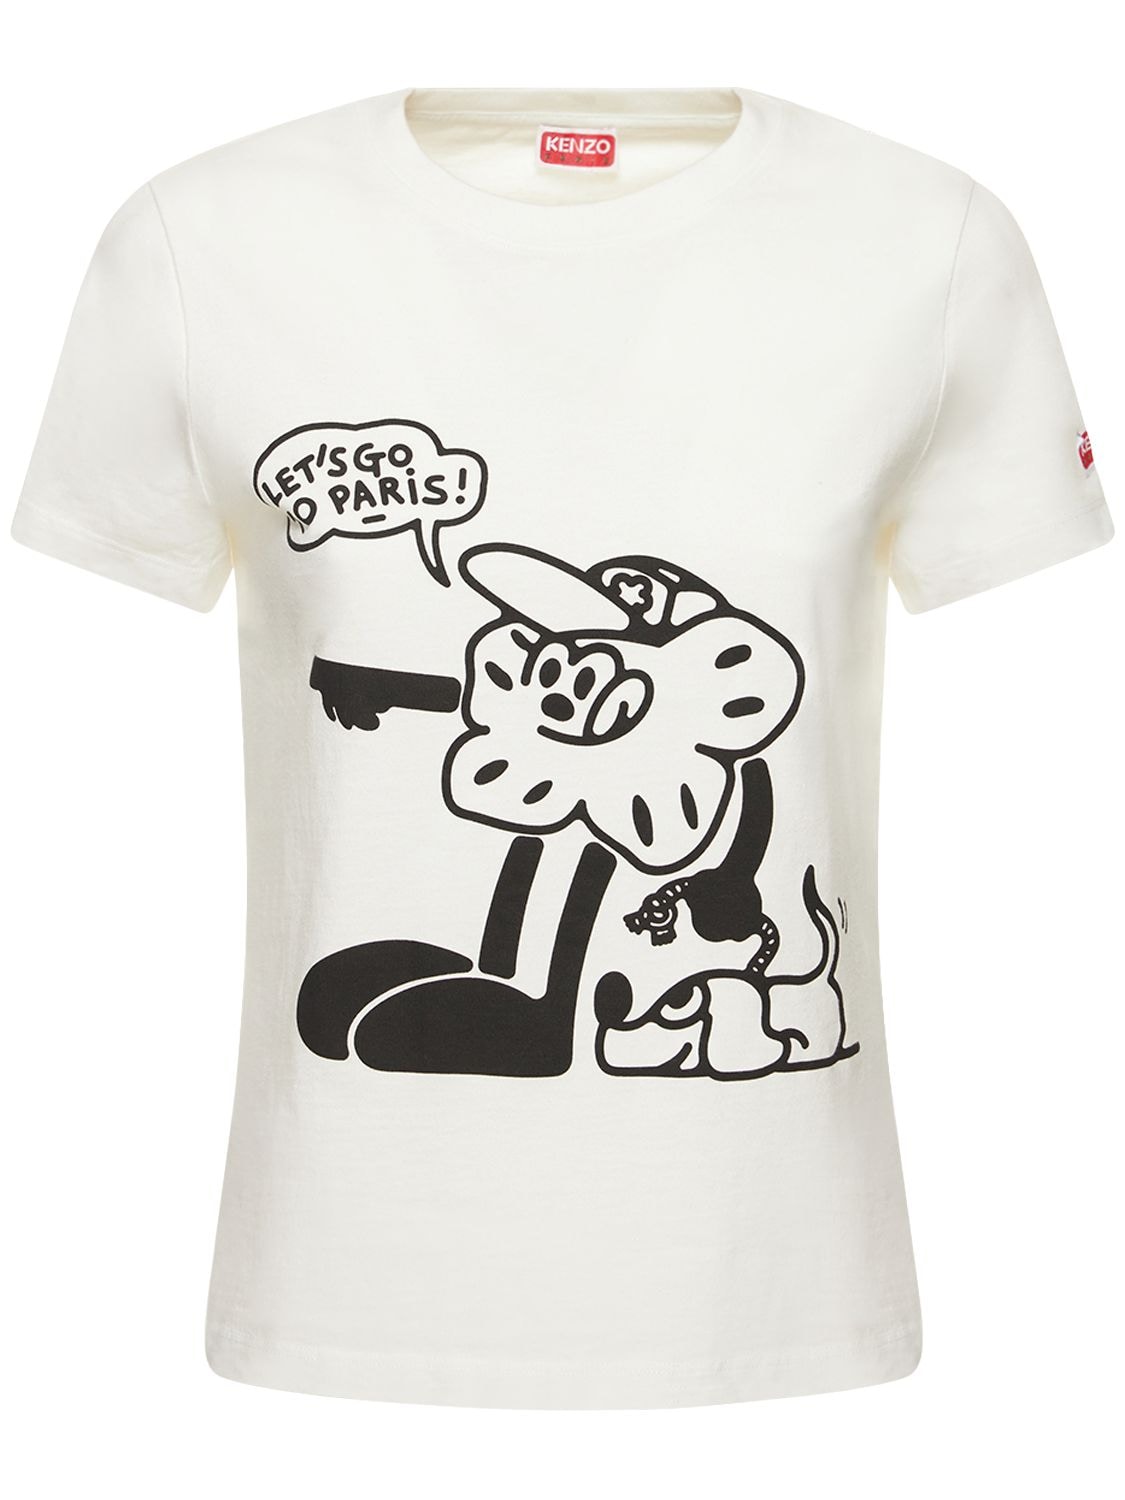 PARIS Boke Printed Classic T-shirts Smart Closet